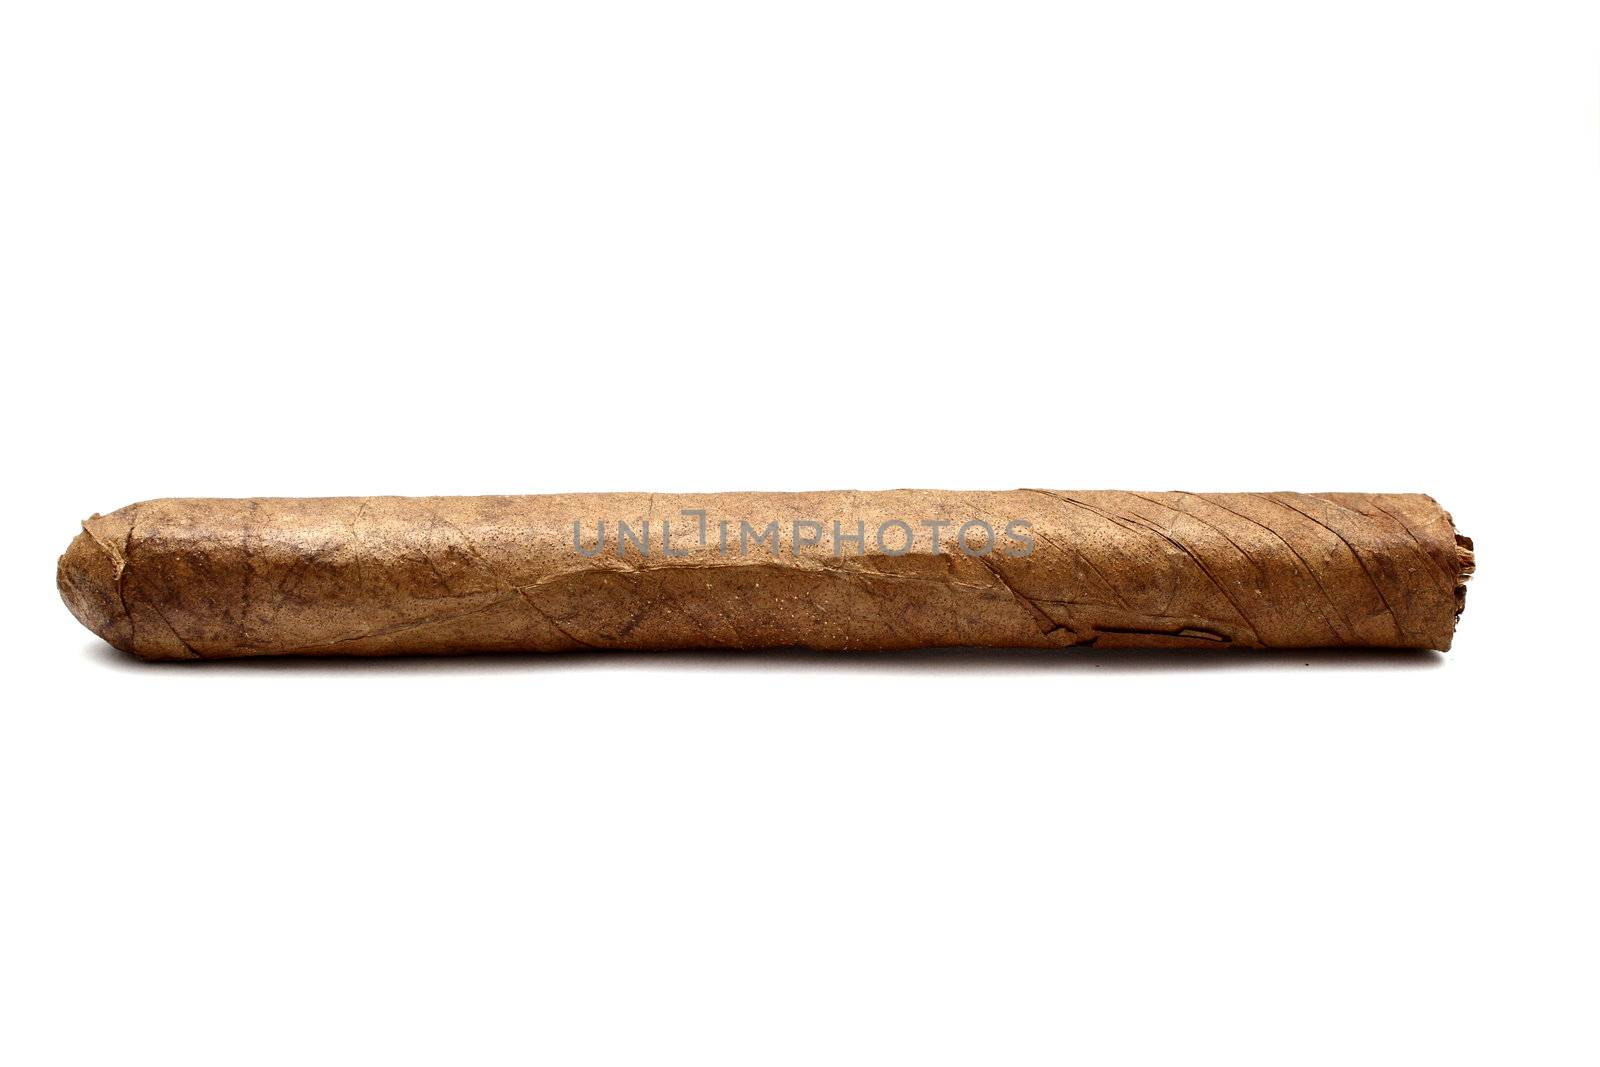 big cuban cigar isolated on white background